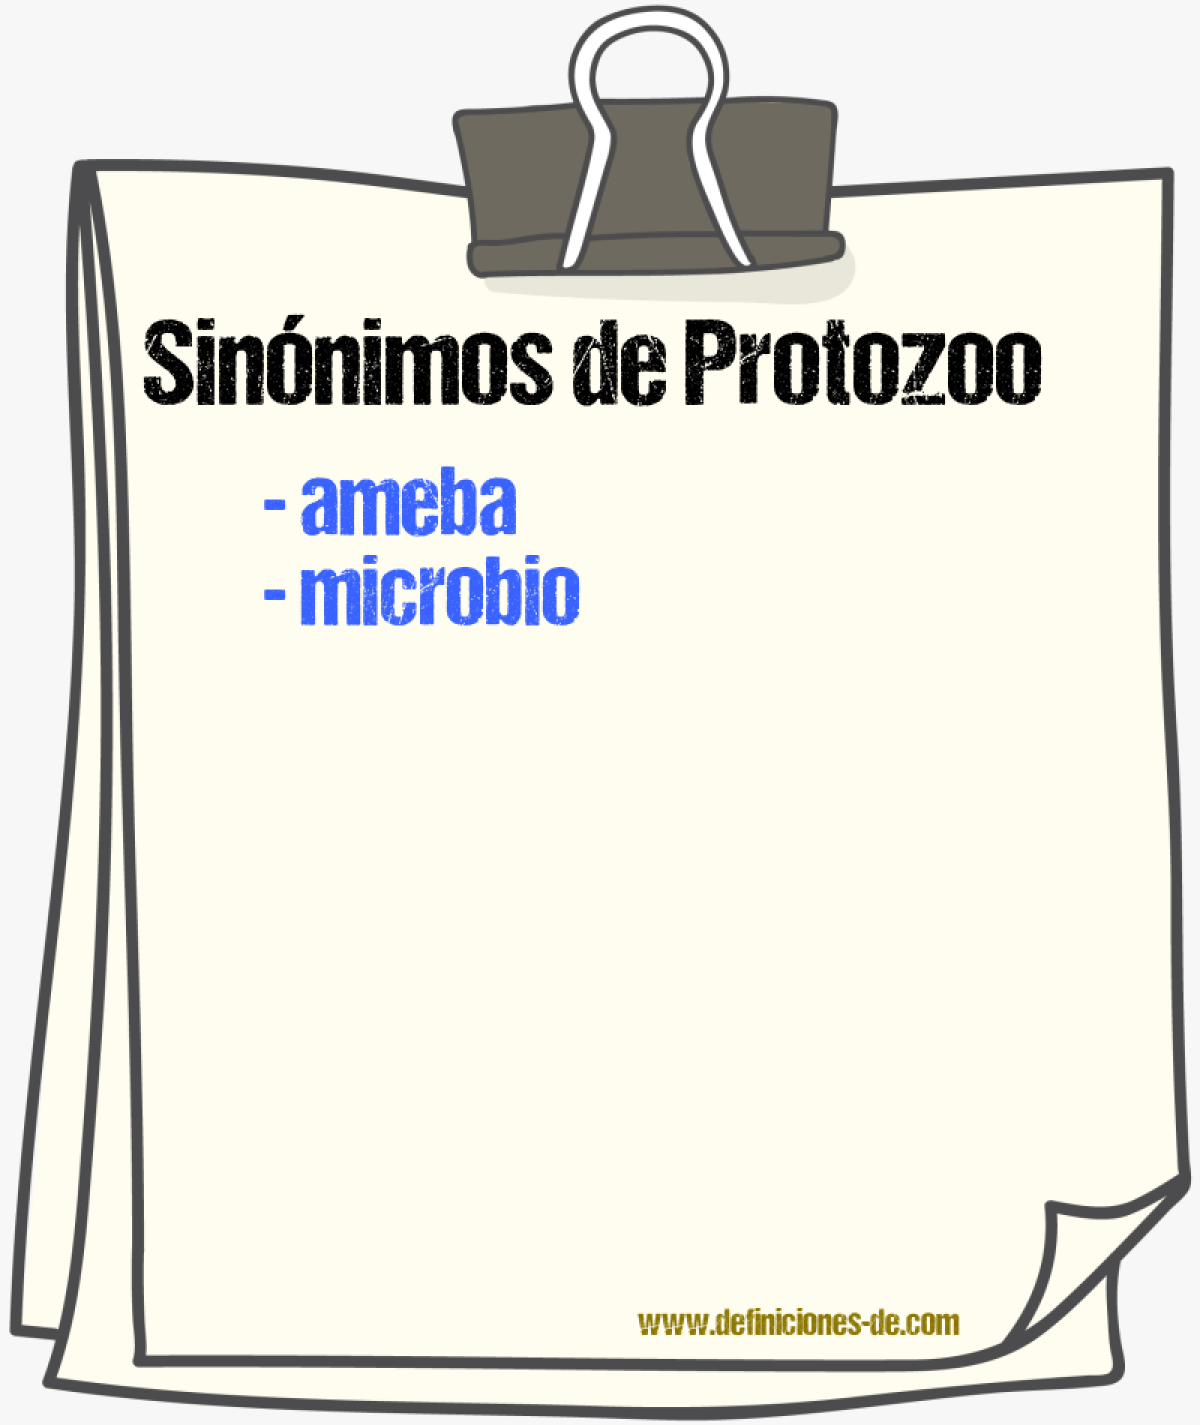 Sinónimos de protozoo